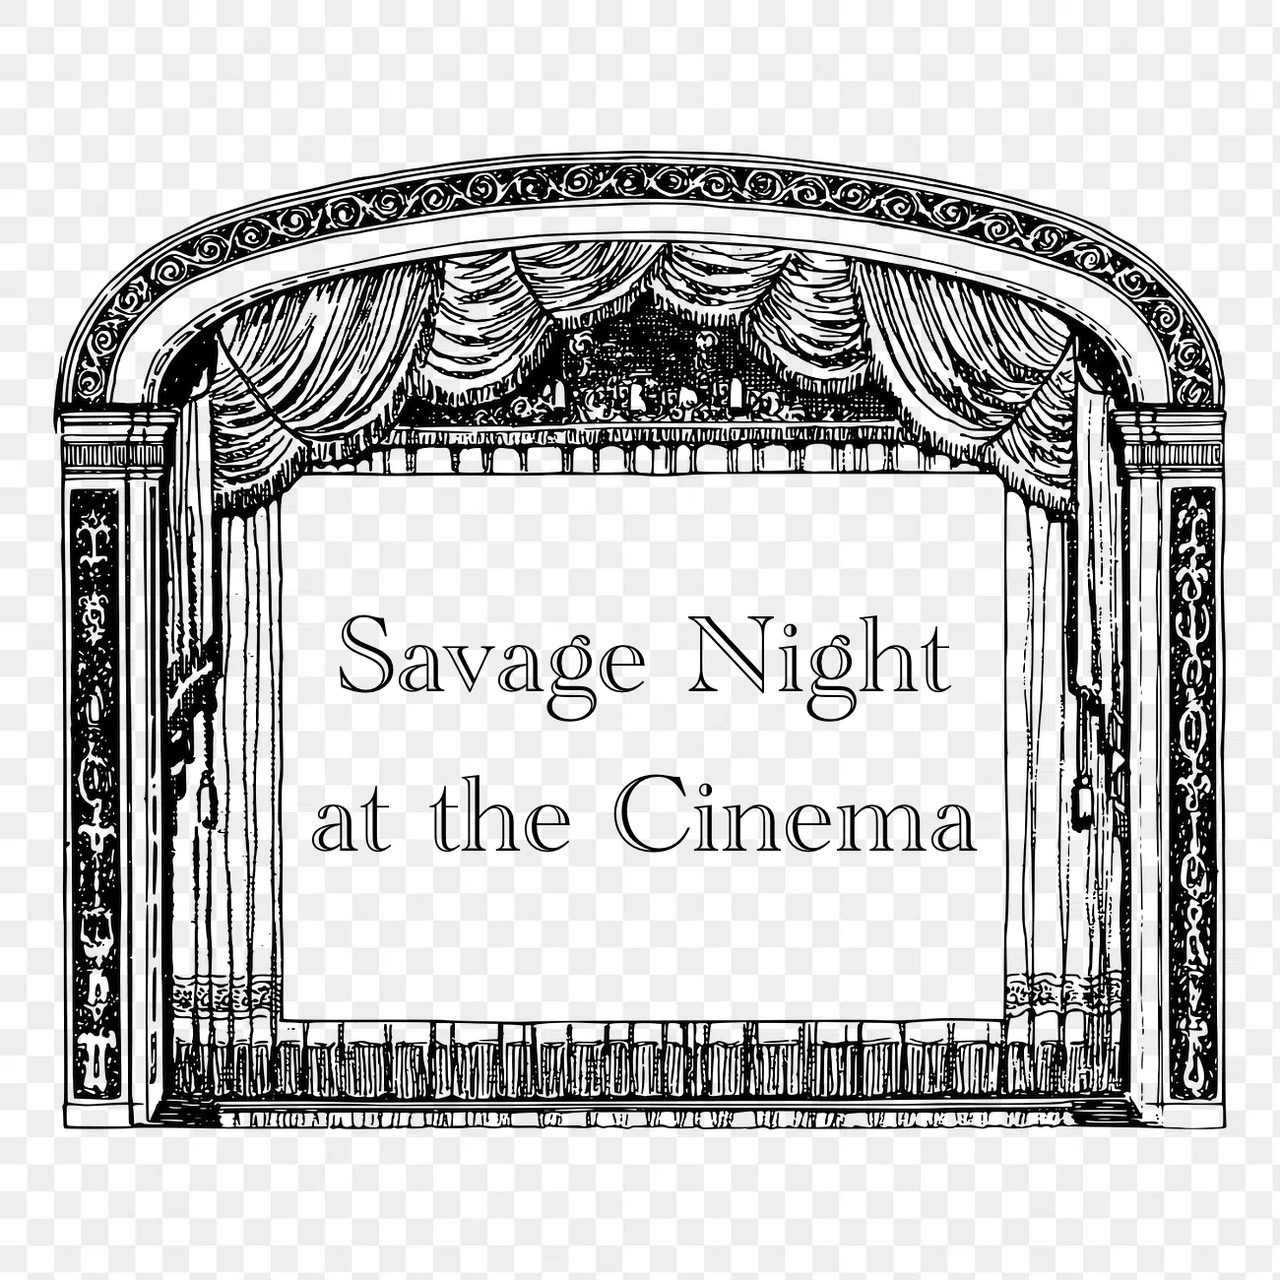 Savage Night at the Cinema